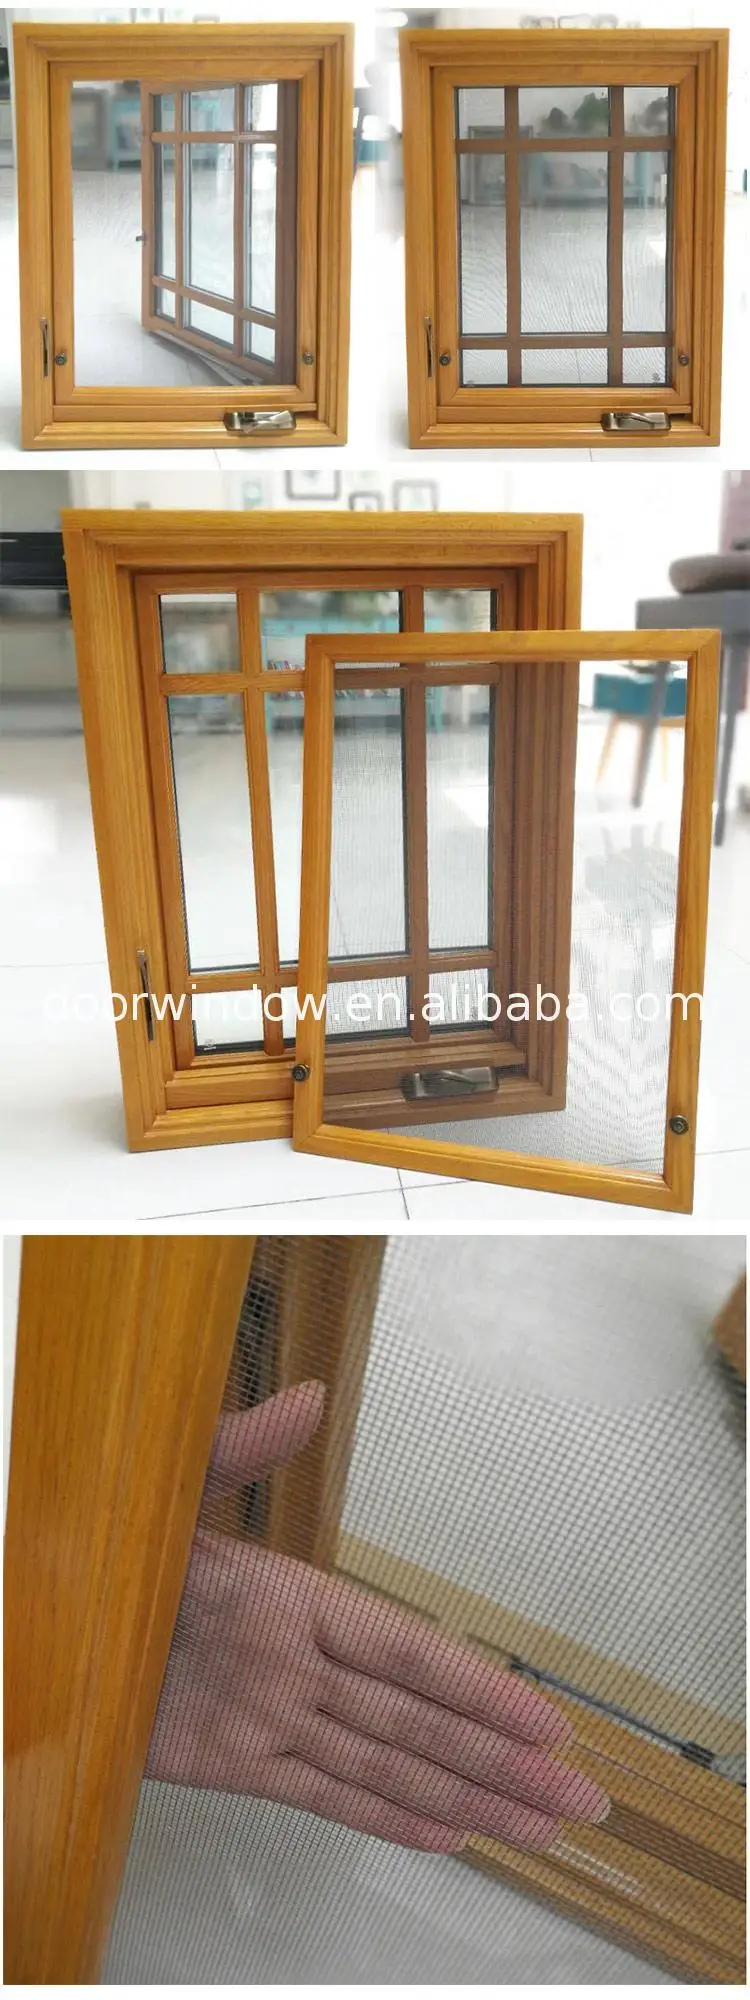 Best Quality wooden windows uk poland online